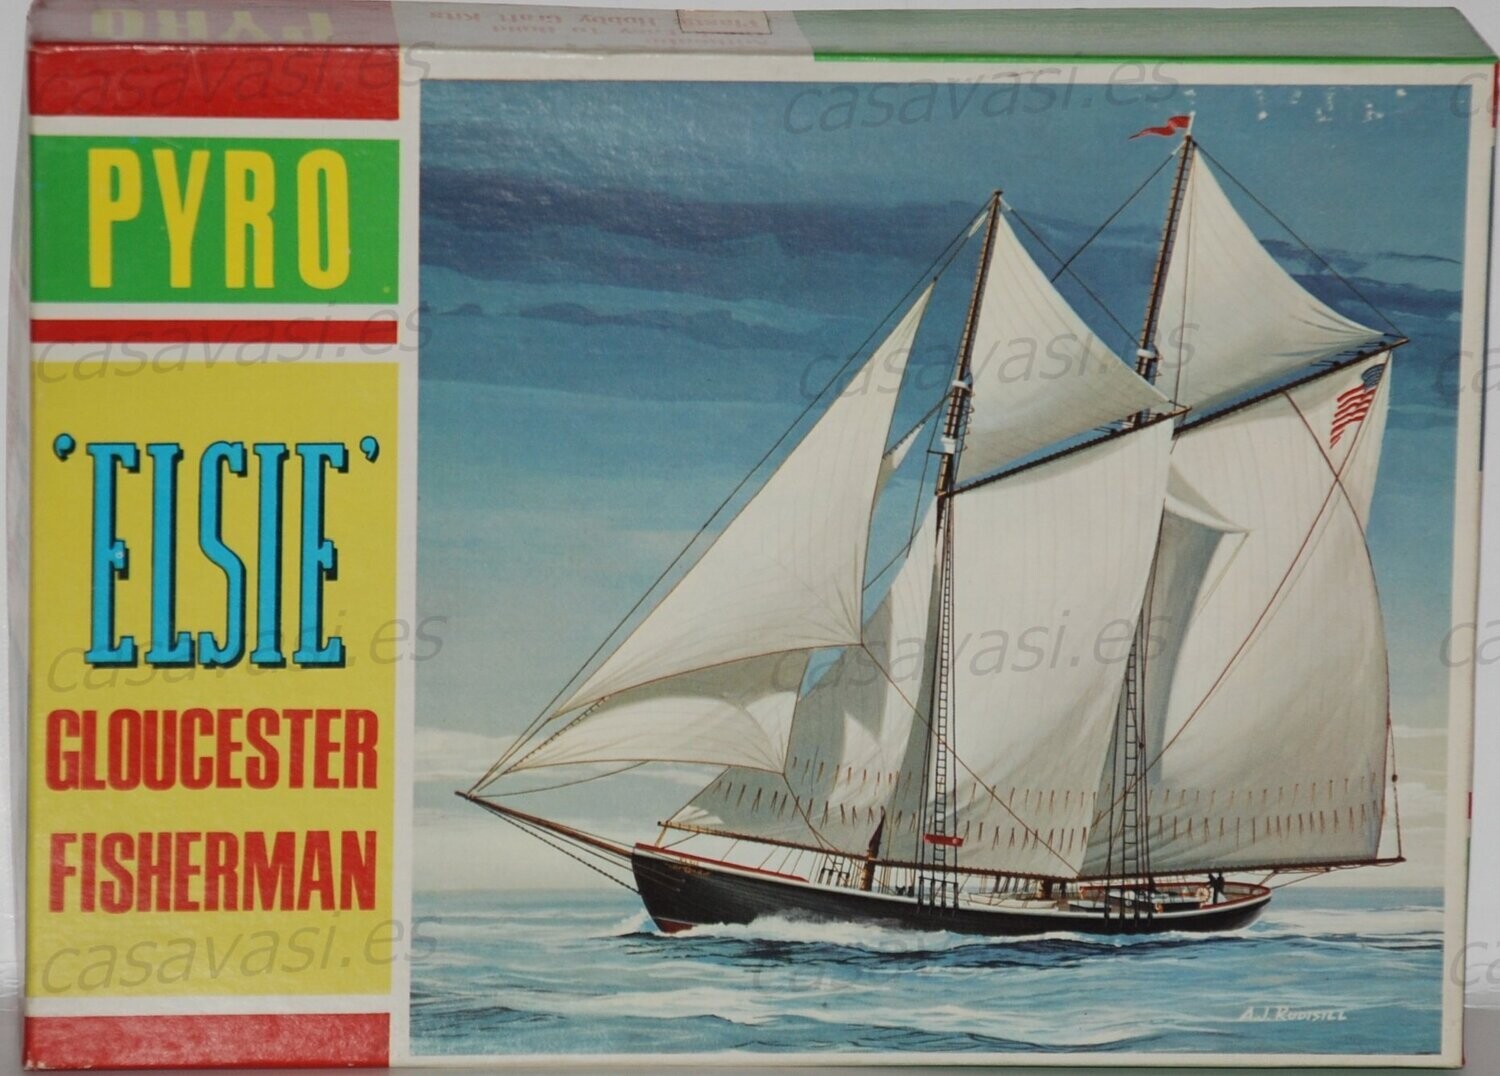 Pyro - 1966 - c259-100 - Nº 13 - " Elsie " Gloucester Fisherman
Box Size 25 x 18 cm.